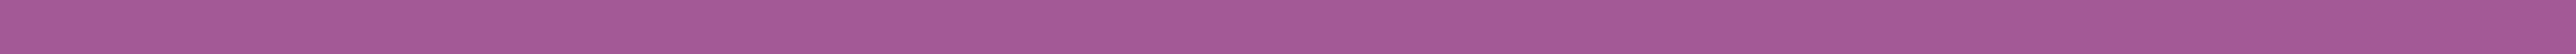 purple-line-1